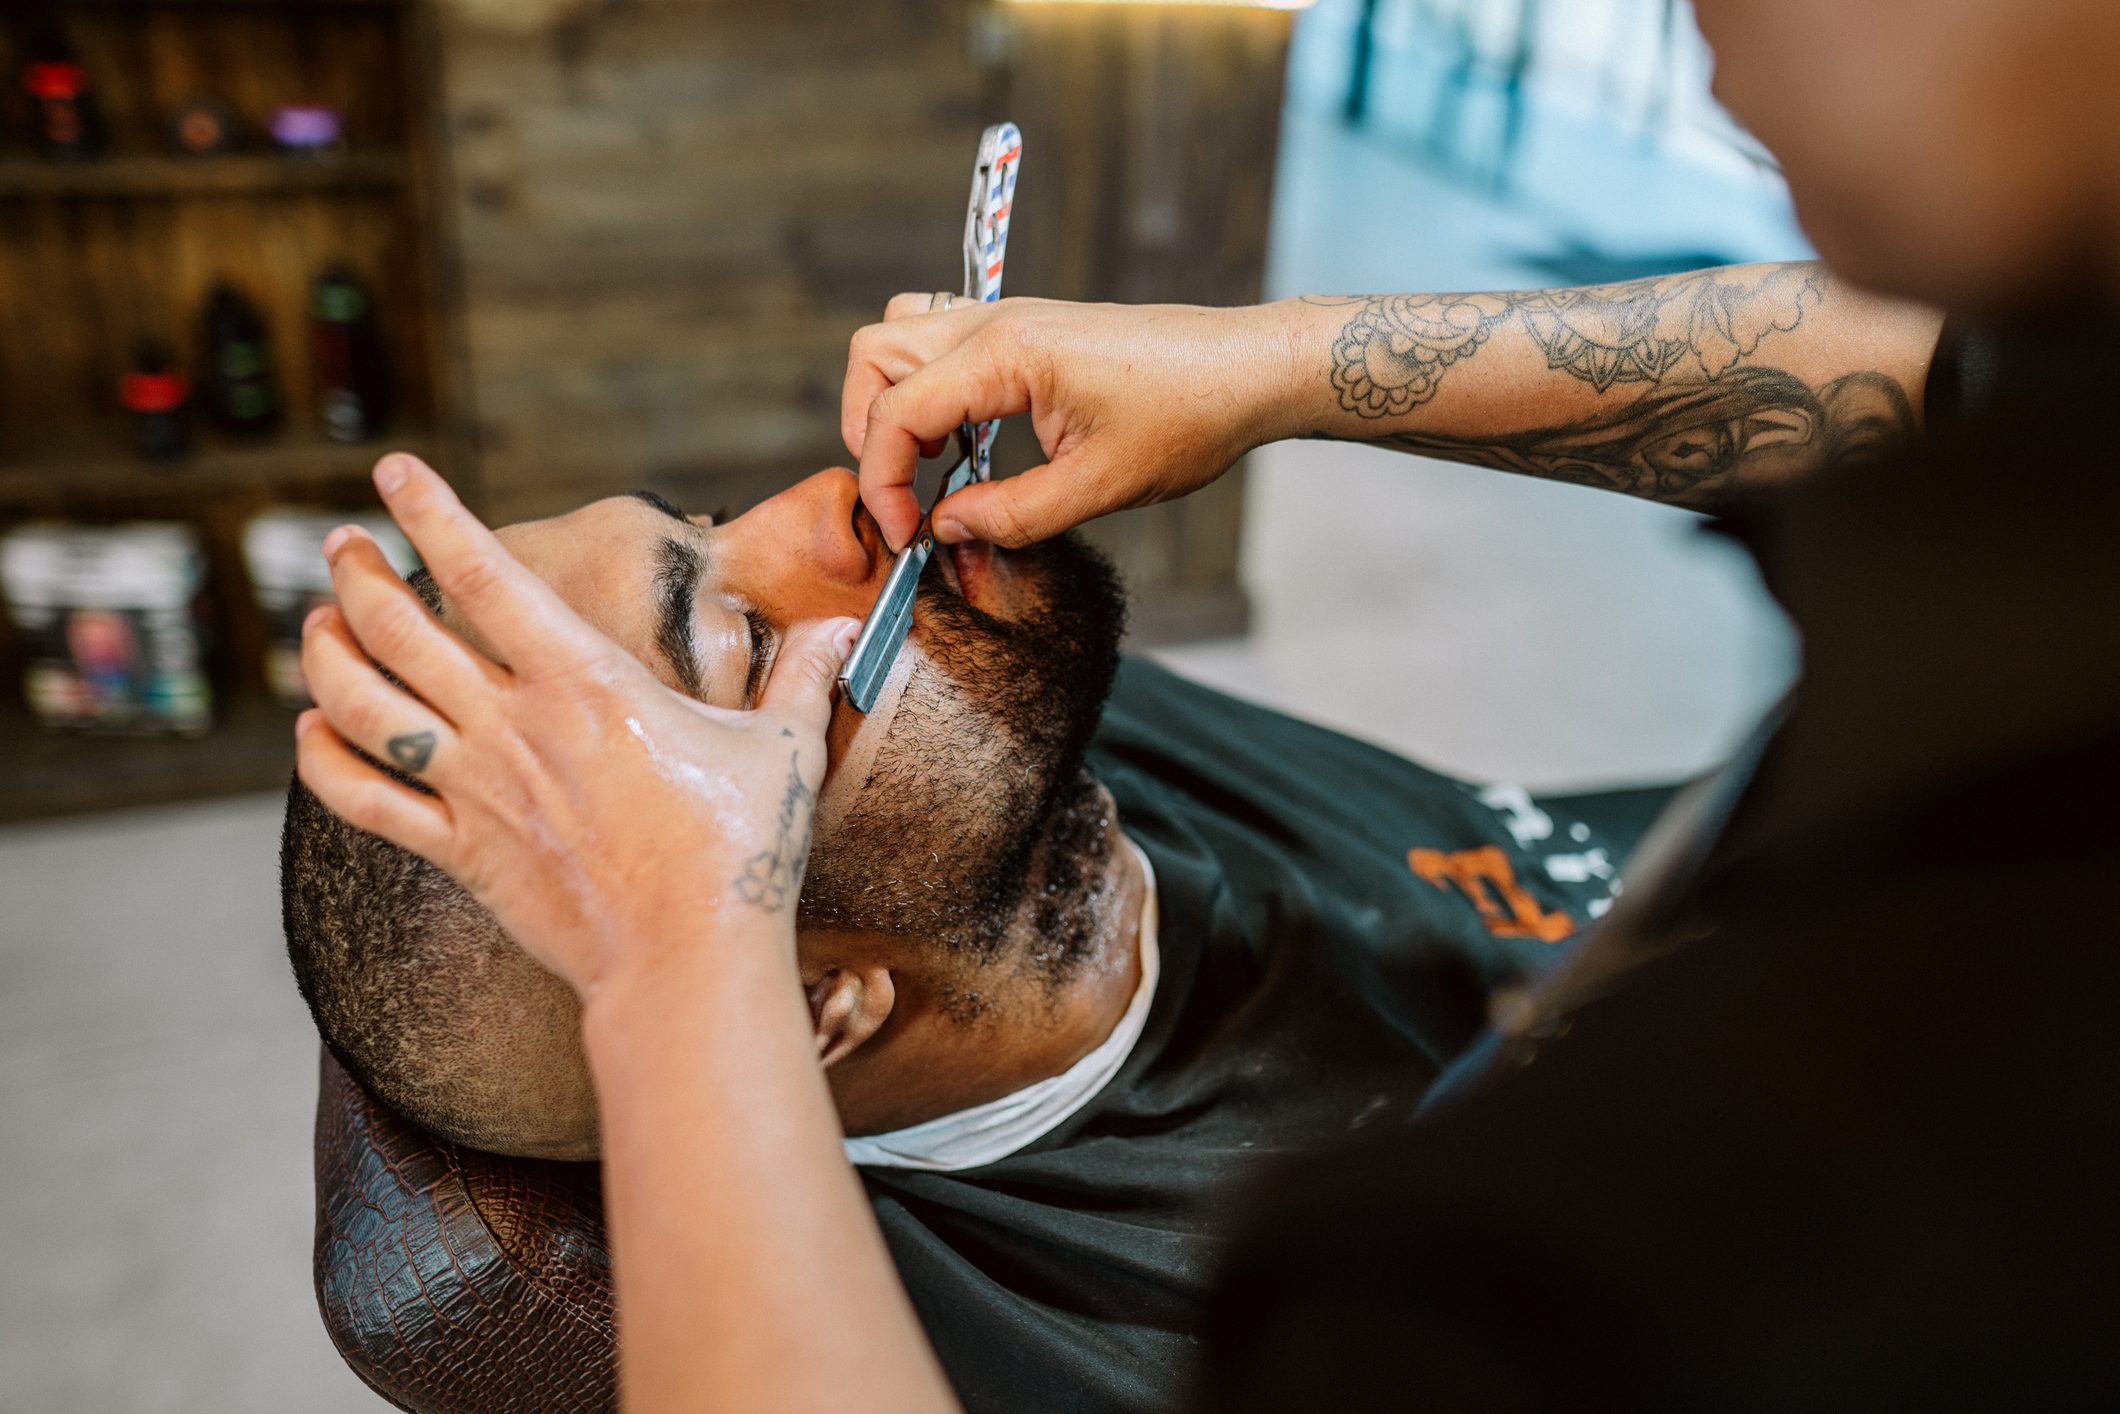 Barber using a razor to trim a customer's beard in a barber shop